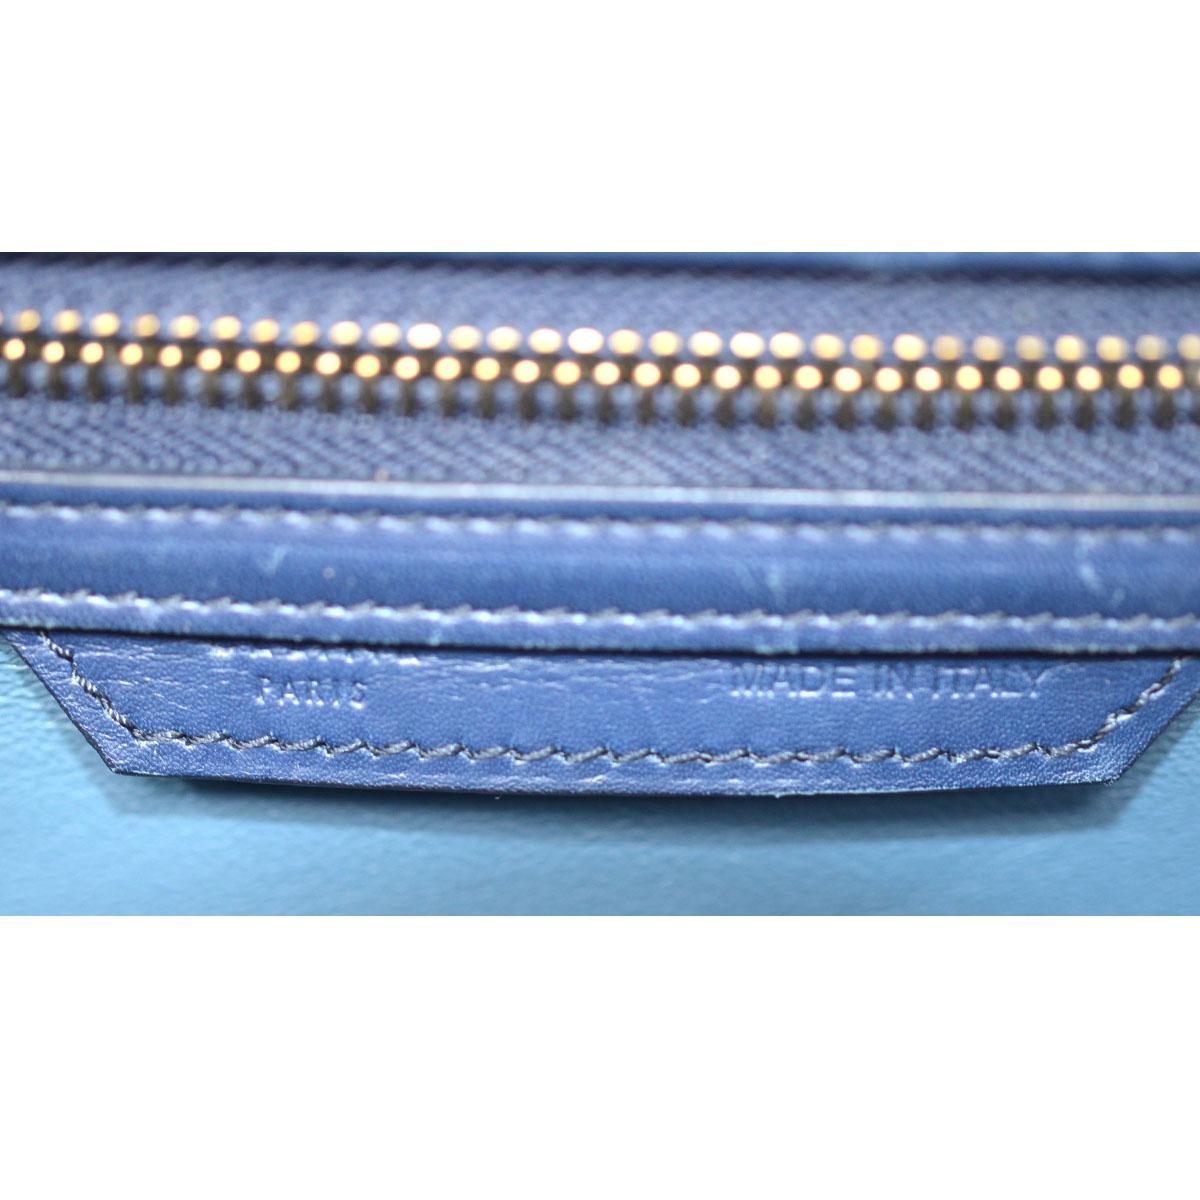 Celine Tri Color Navy, Blue and Gray Mini Luggage Leather Tote Handbag 4